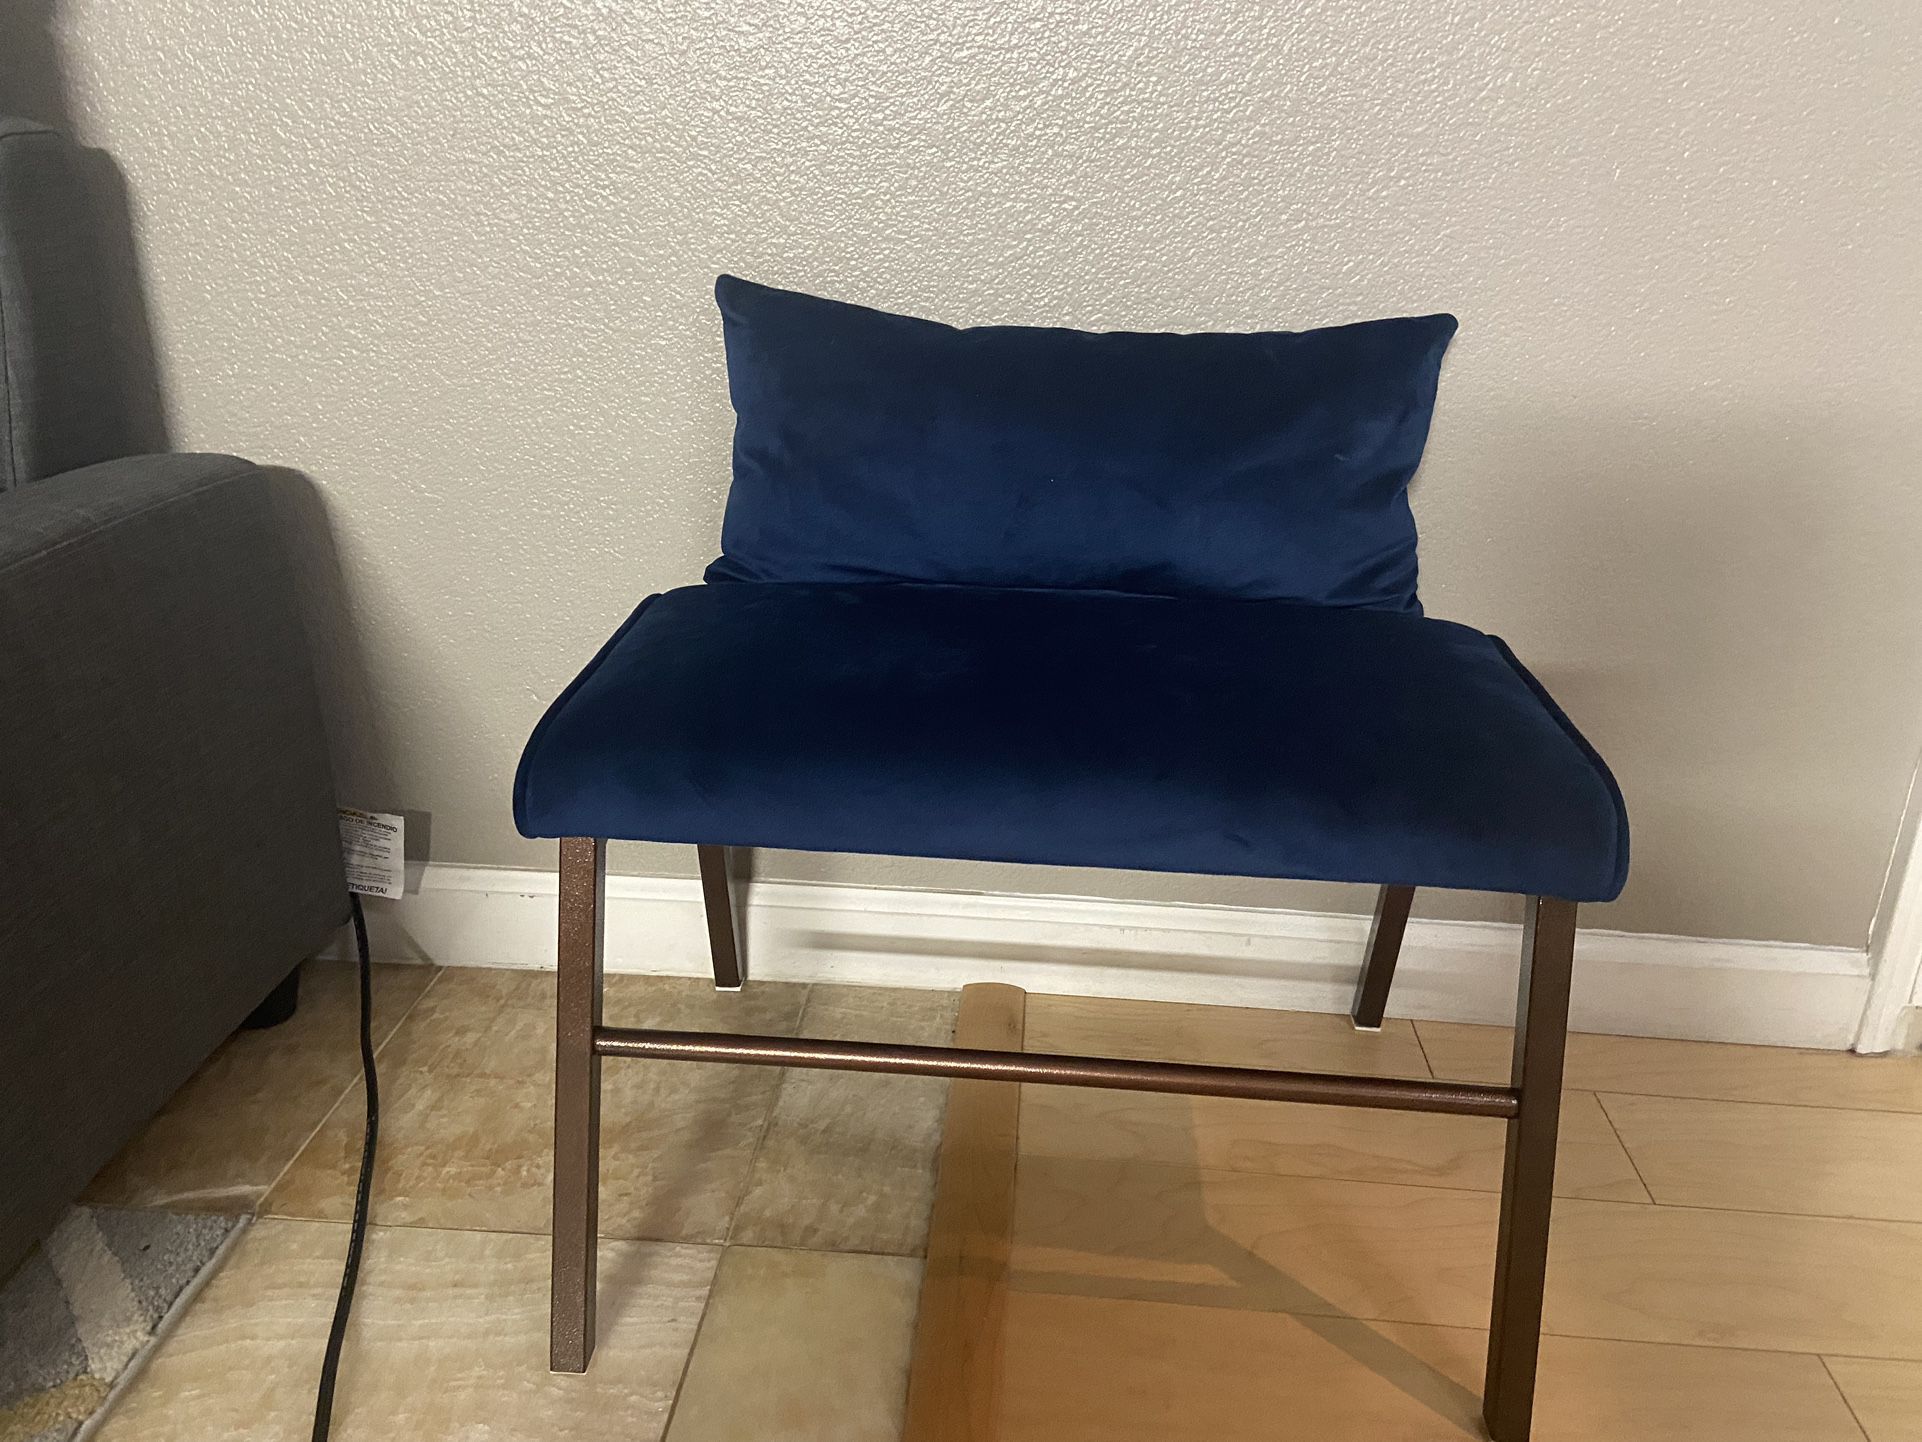 XL Chair, Ottoman And Throw Pillow 